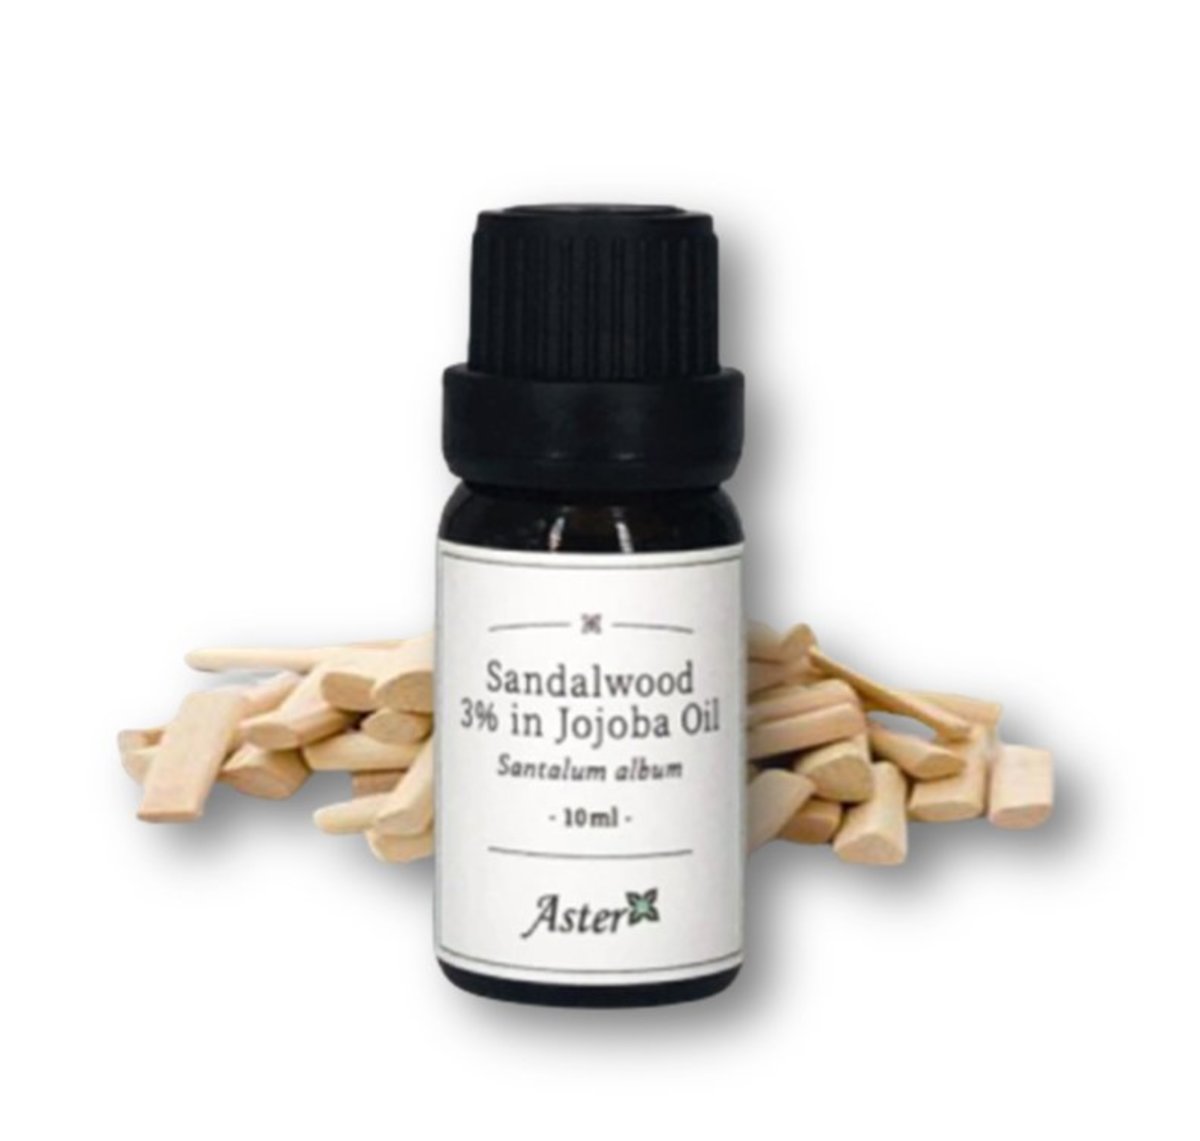 3% Indian Sandalwood (Santalum album) in Organic Jojoba Oil (Simmondsia chinensis) - 10ml